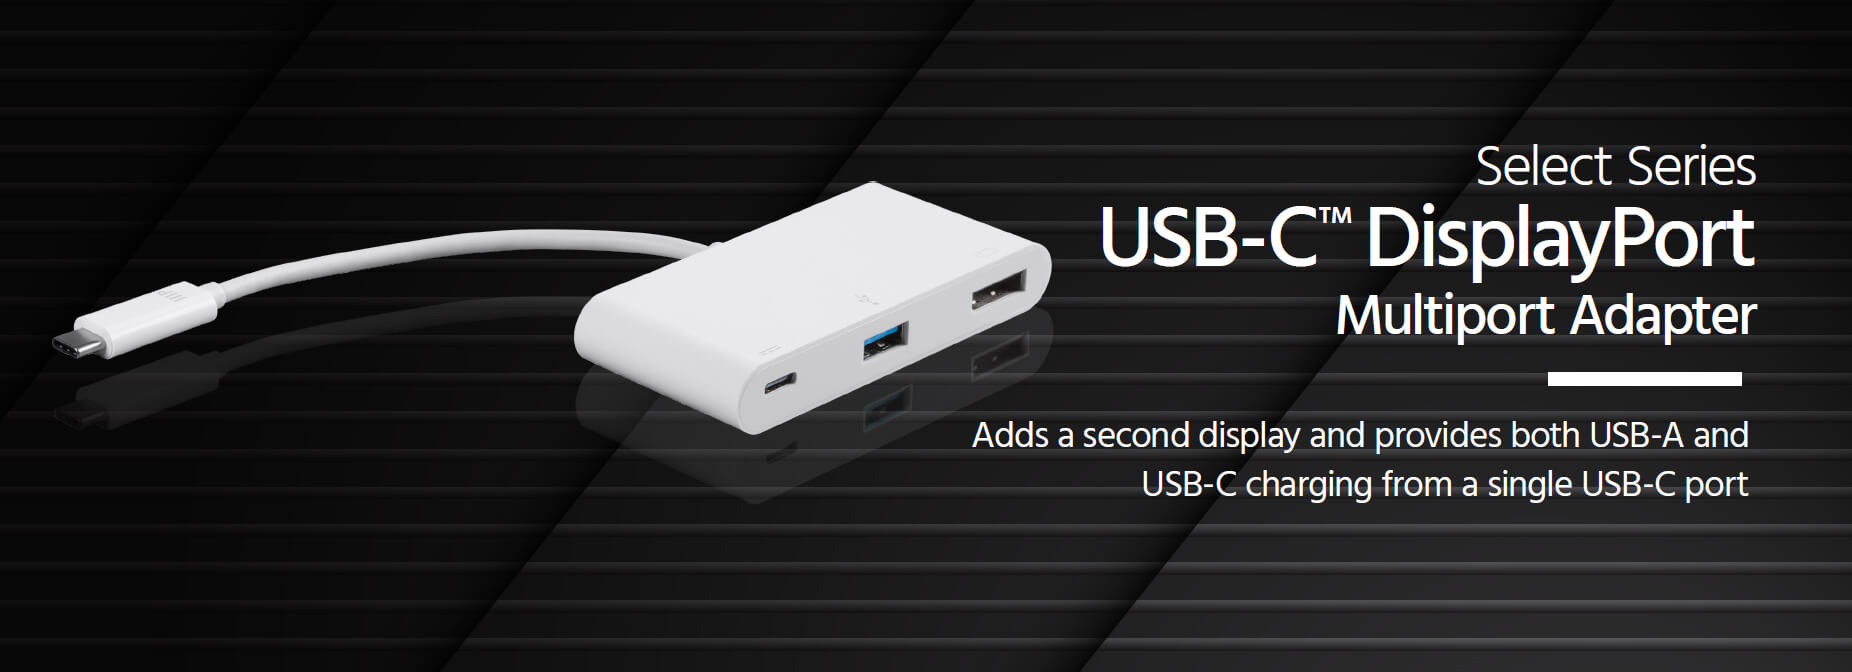 USB-C DisplayPort Multiport Adapter